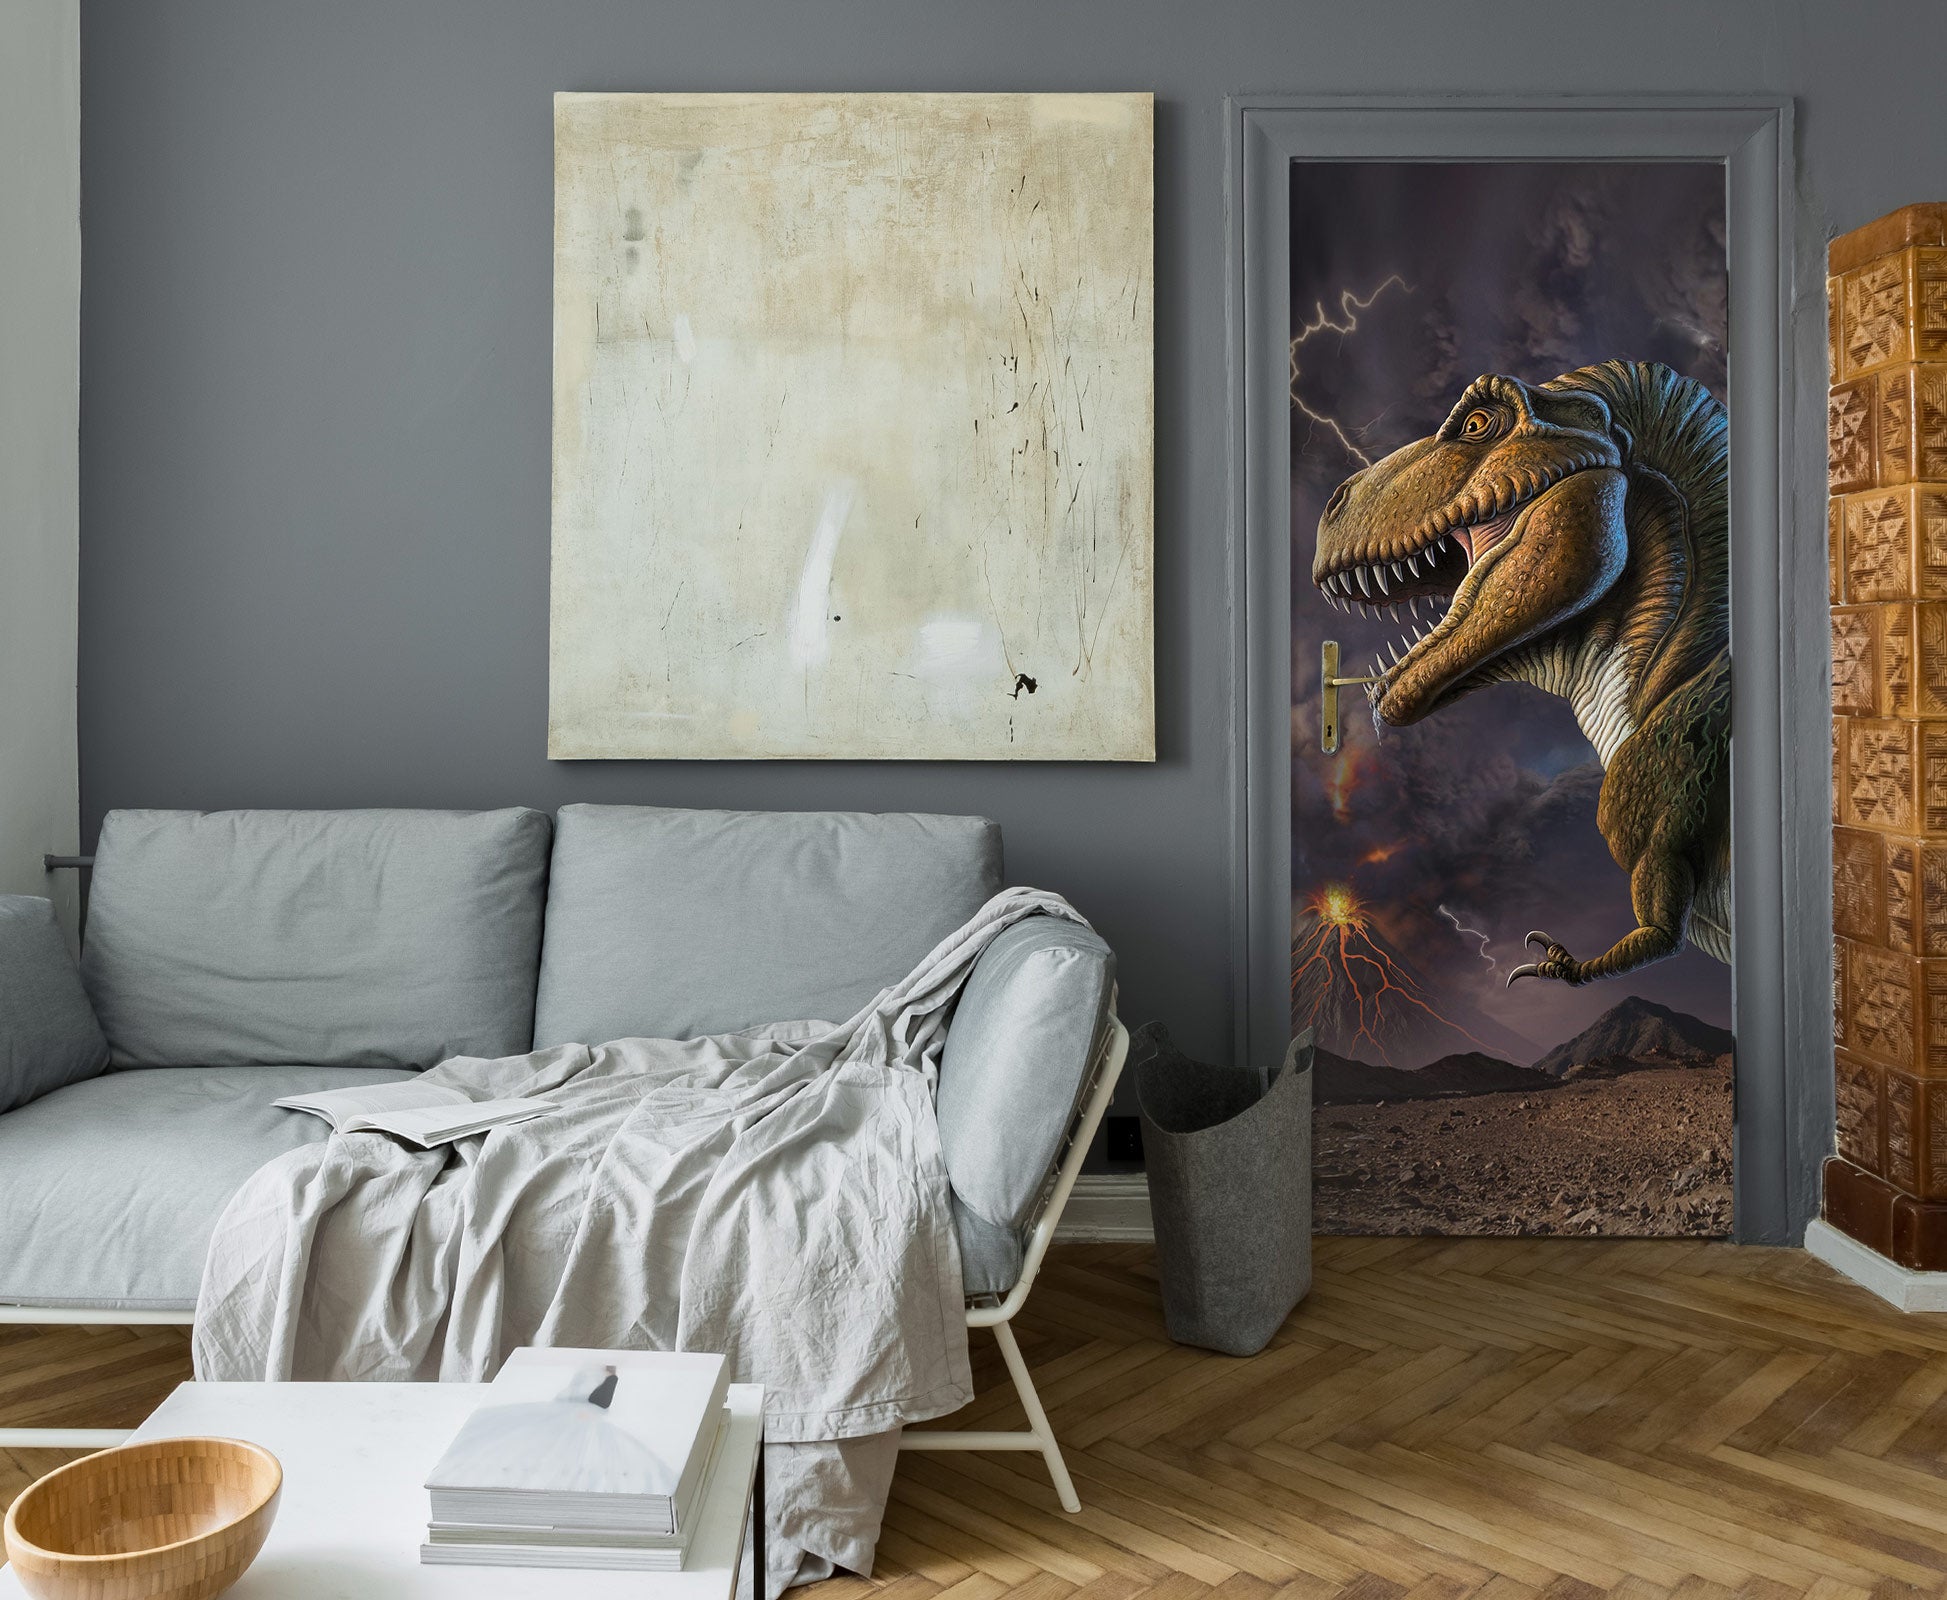 3D Dinosaur 112159 Jerry LoFaro Door Mural